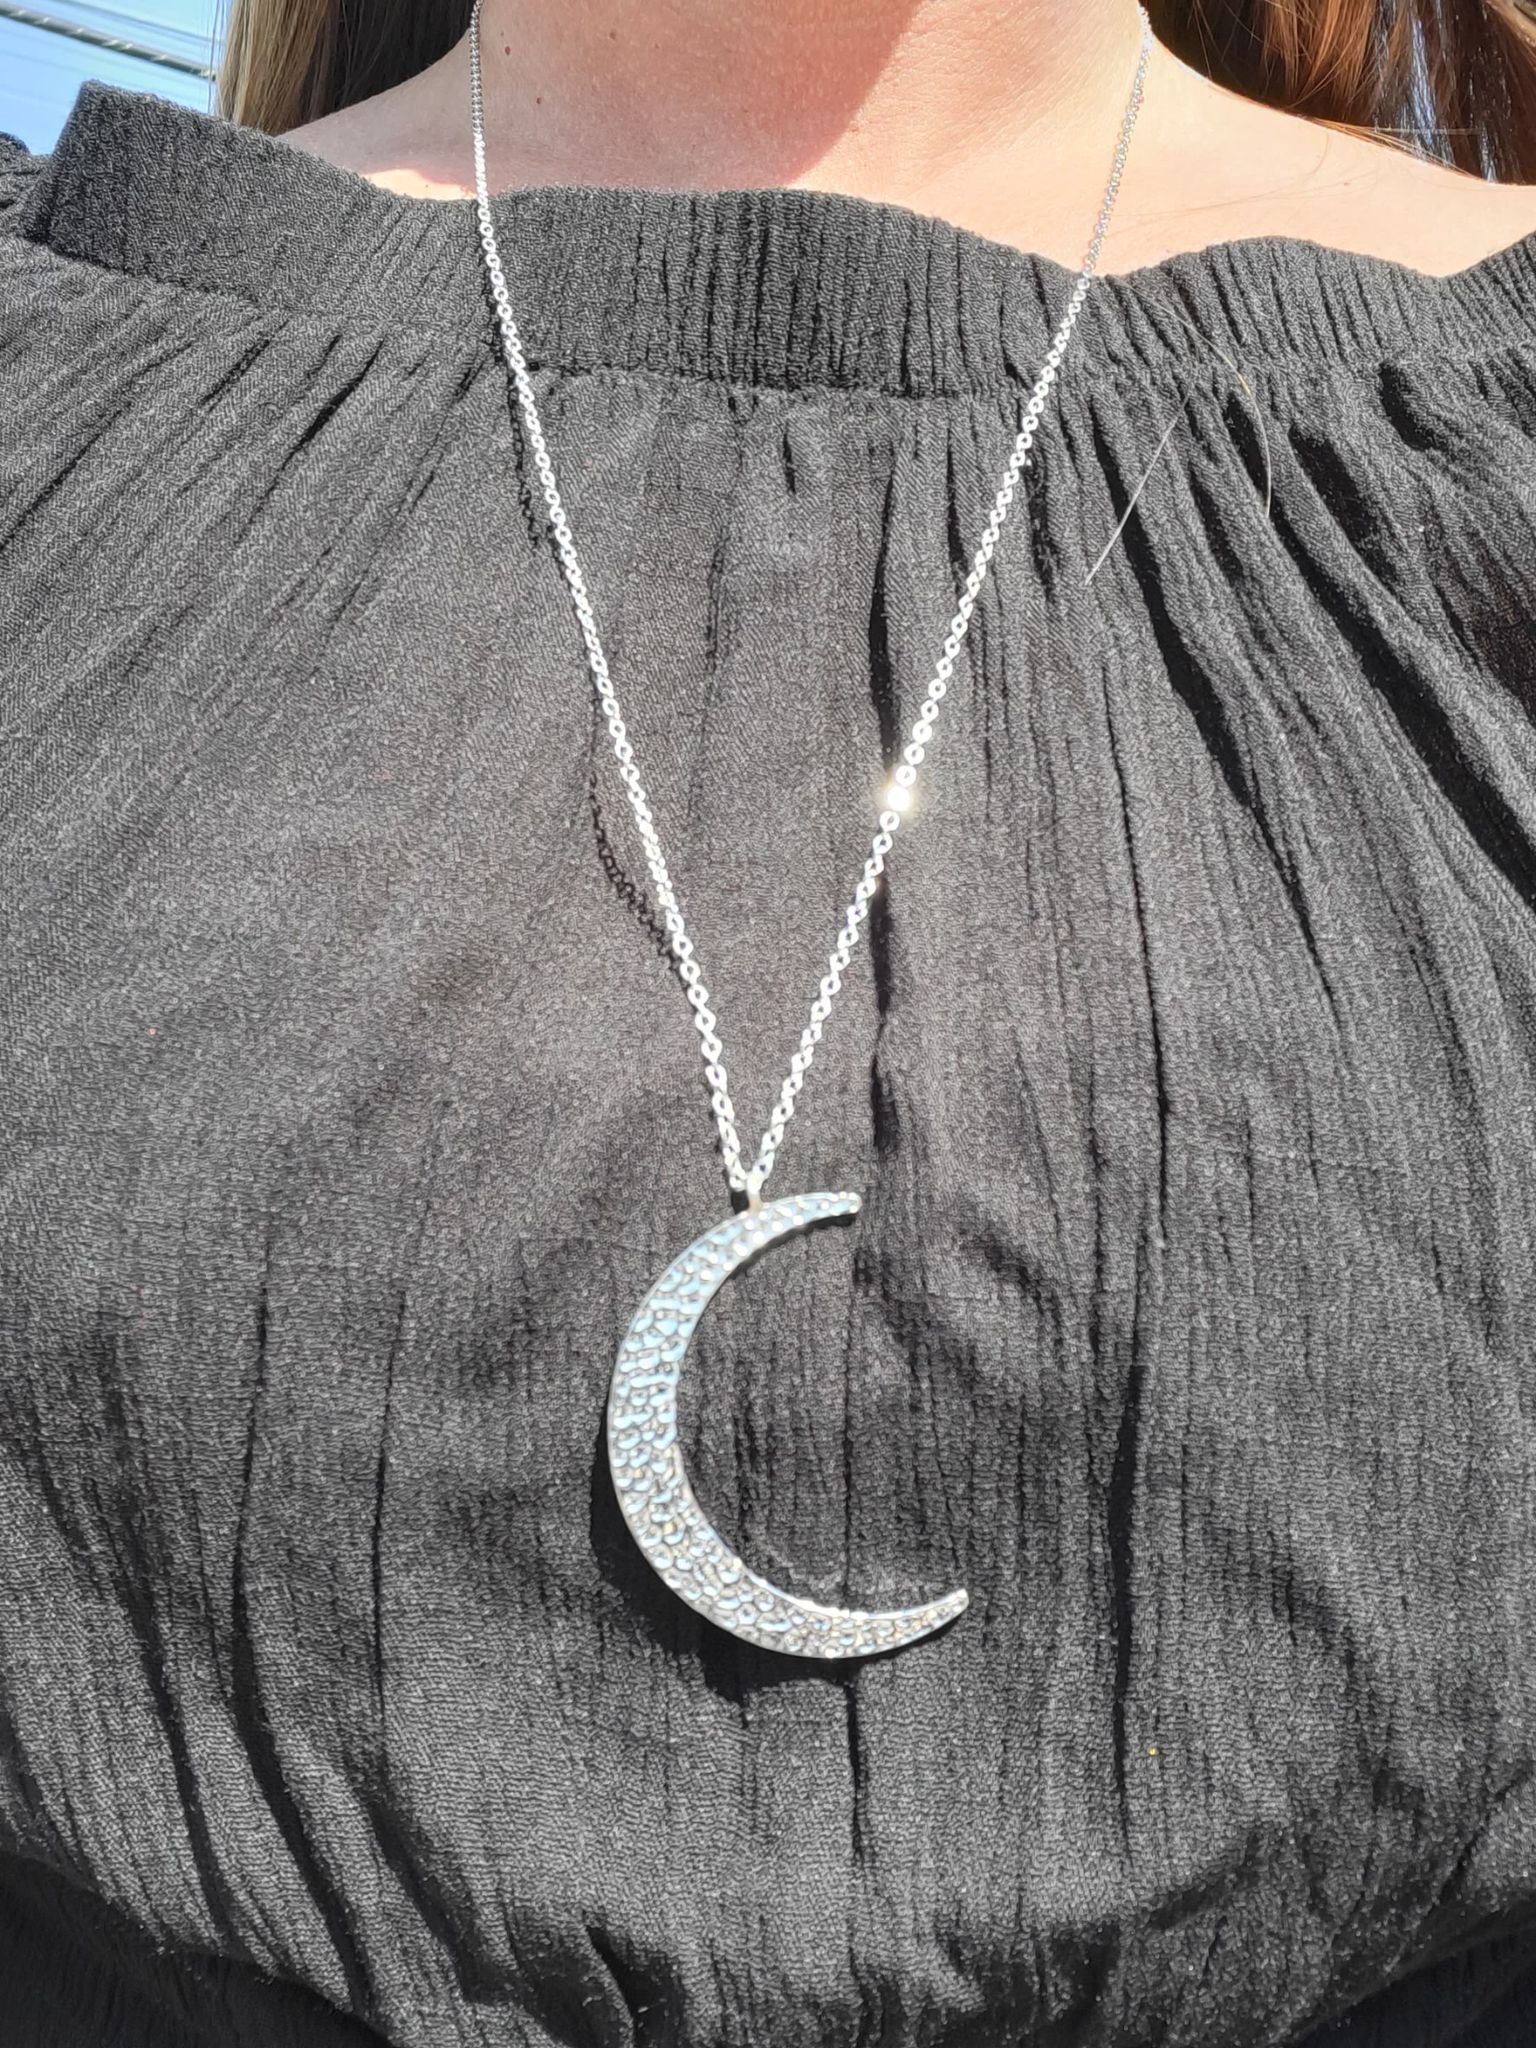 The Luna Necklace